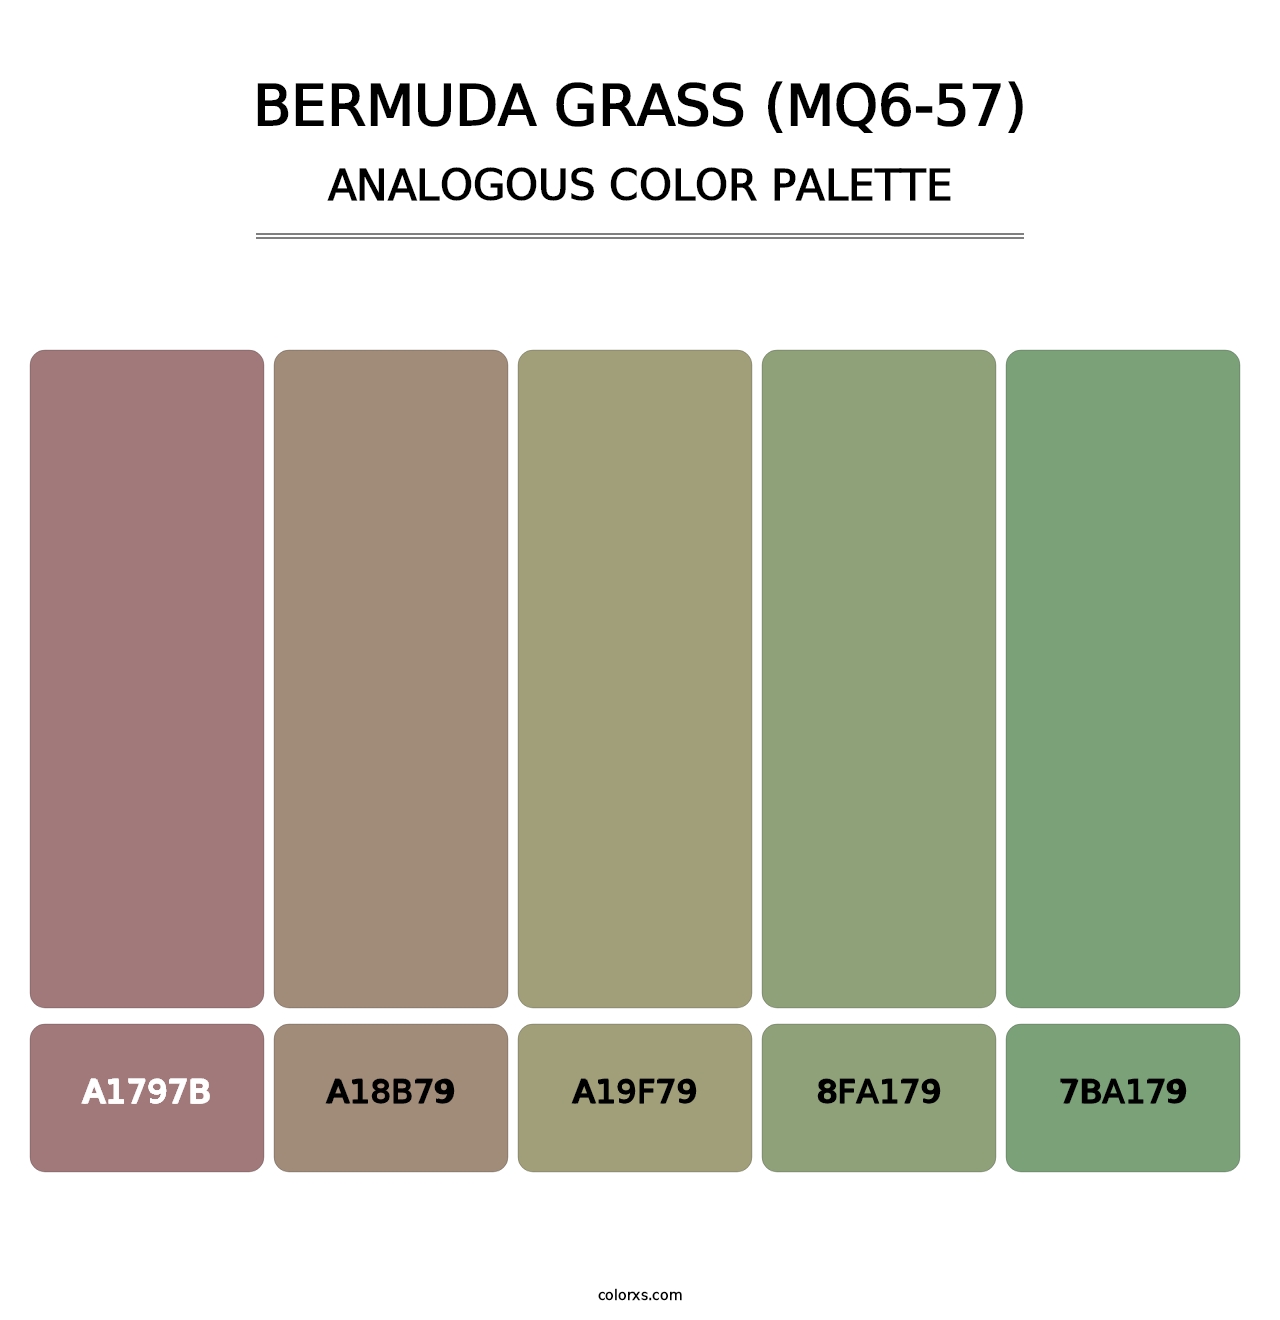 Bermuda Grass (MQ6-57) - Analogous Color Palette